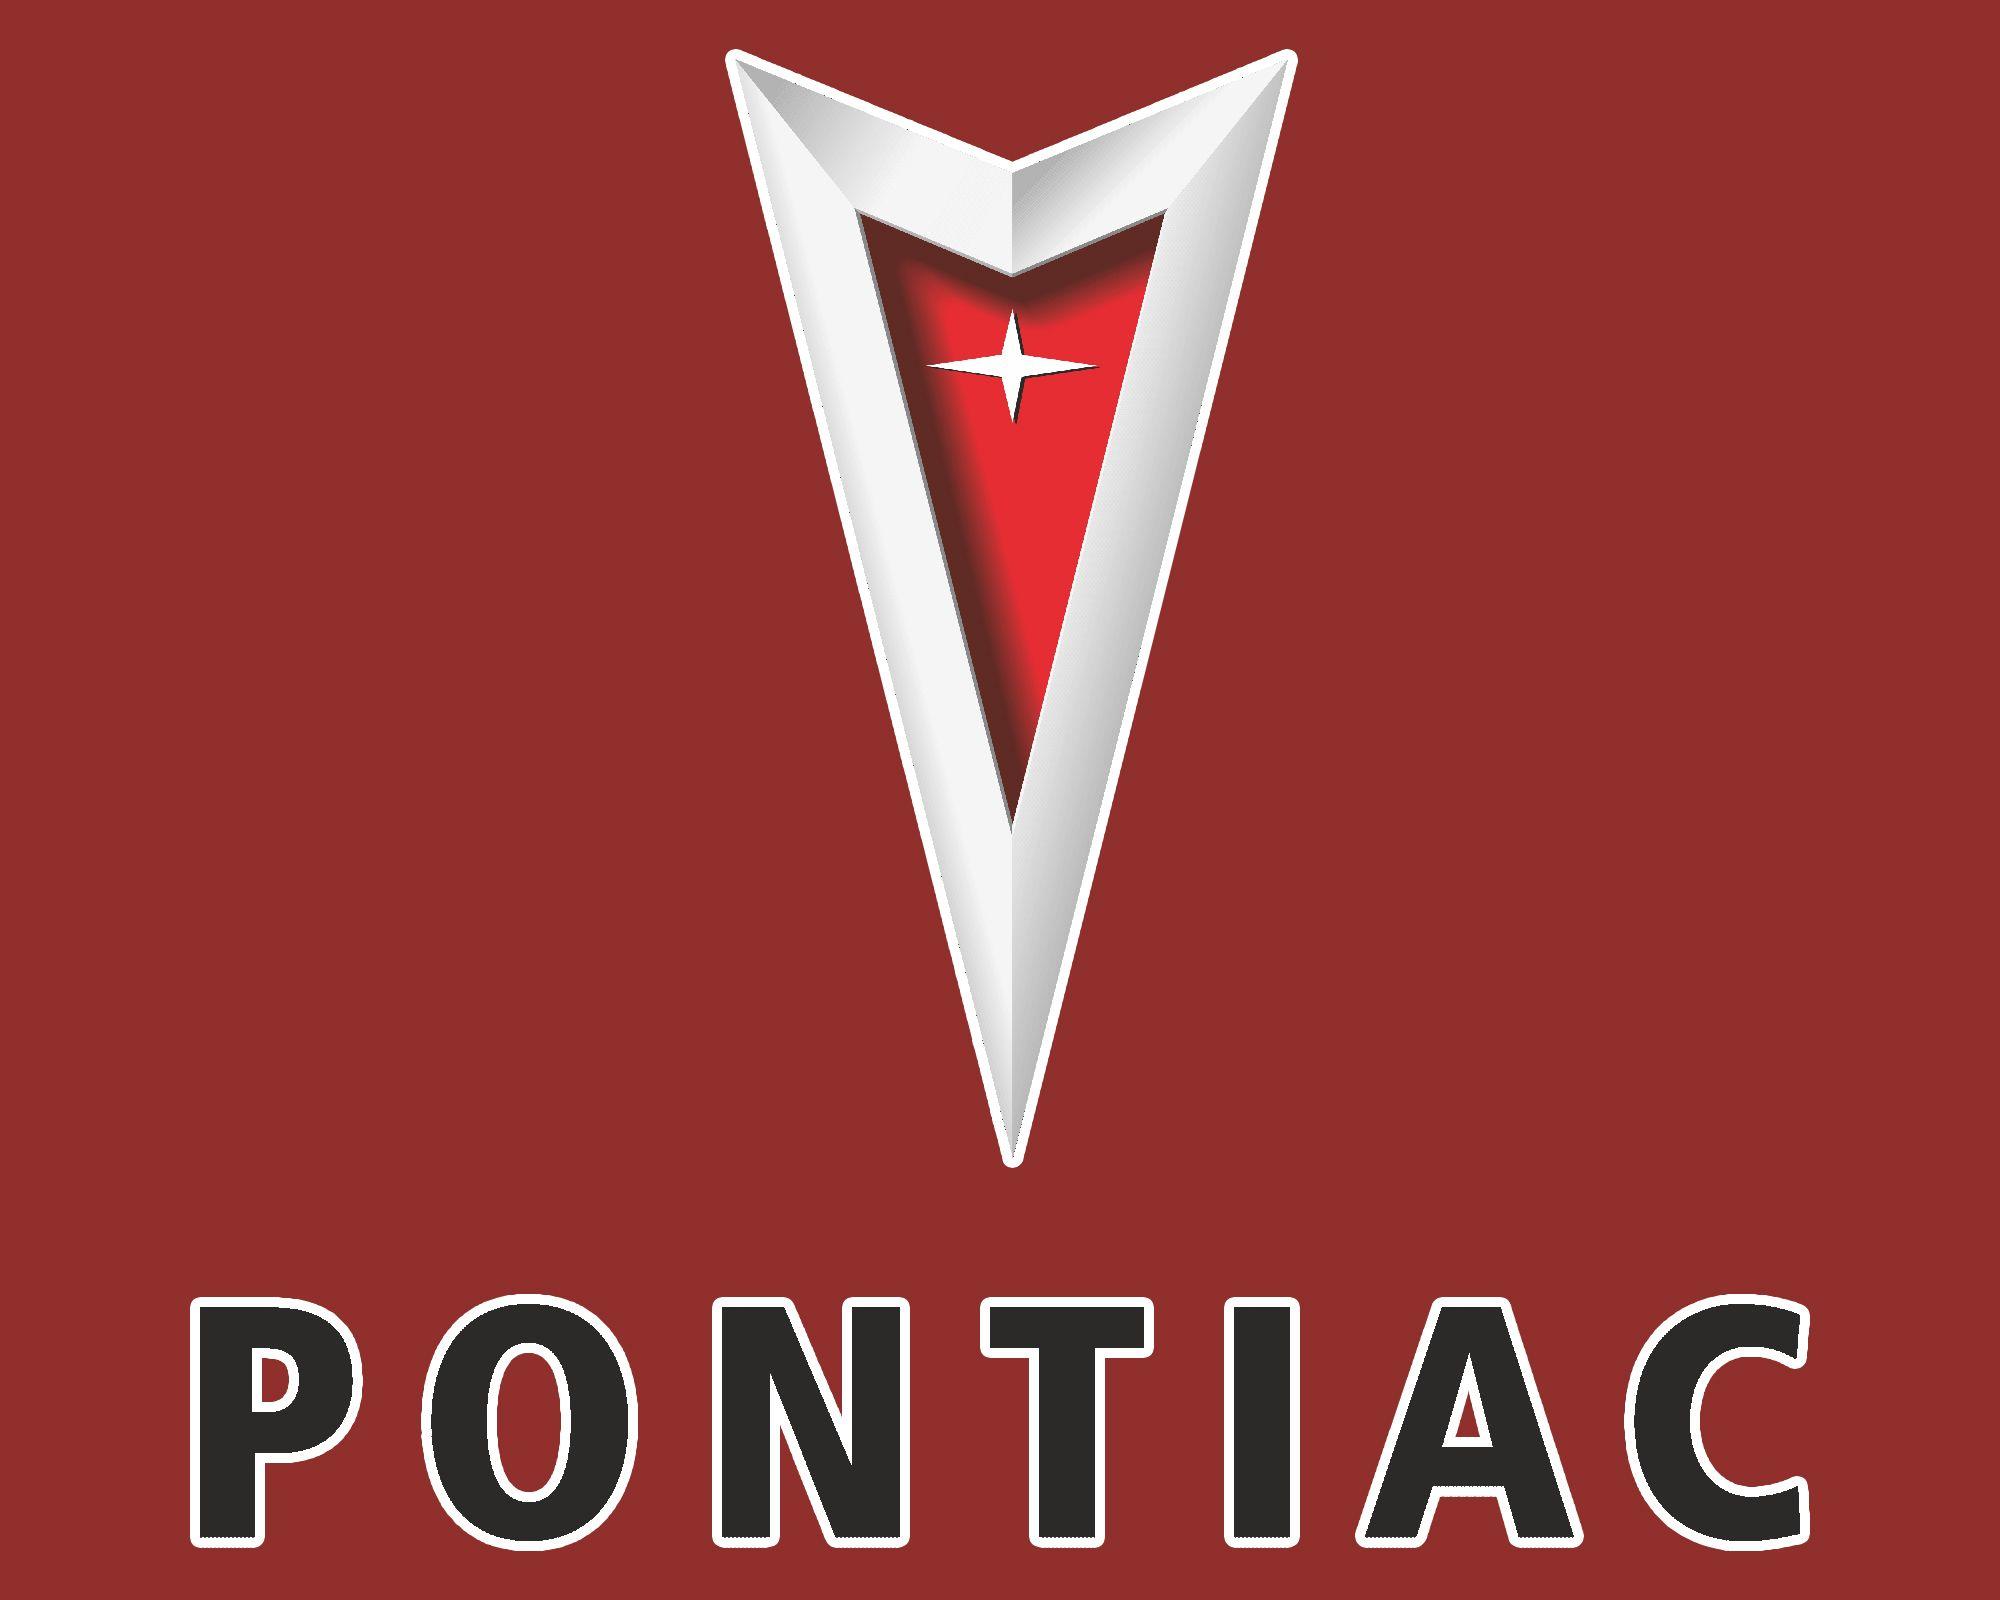 Upside Down Pontiac Logo - Pontiac Logo Meaning and History, latest models. World Cars Brands